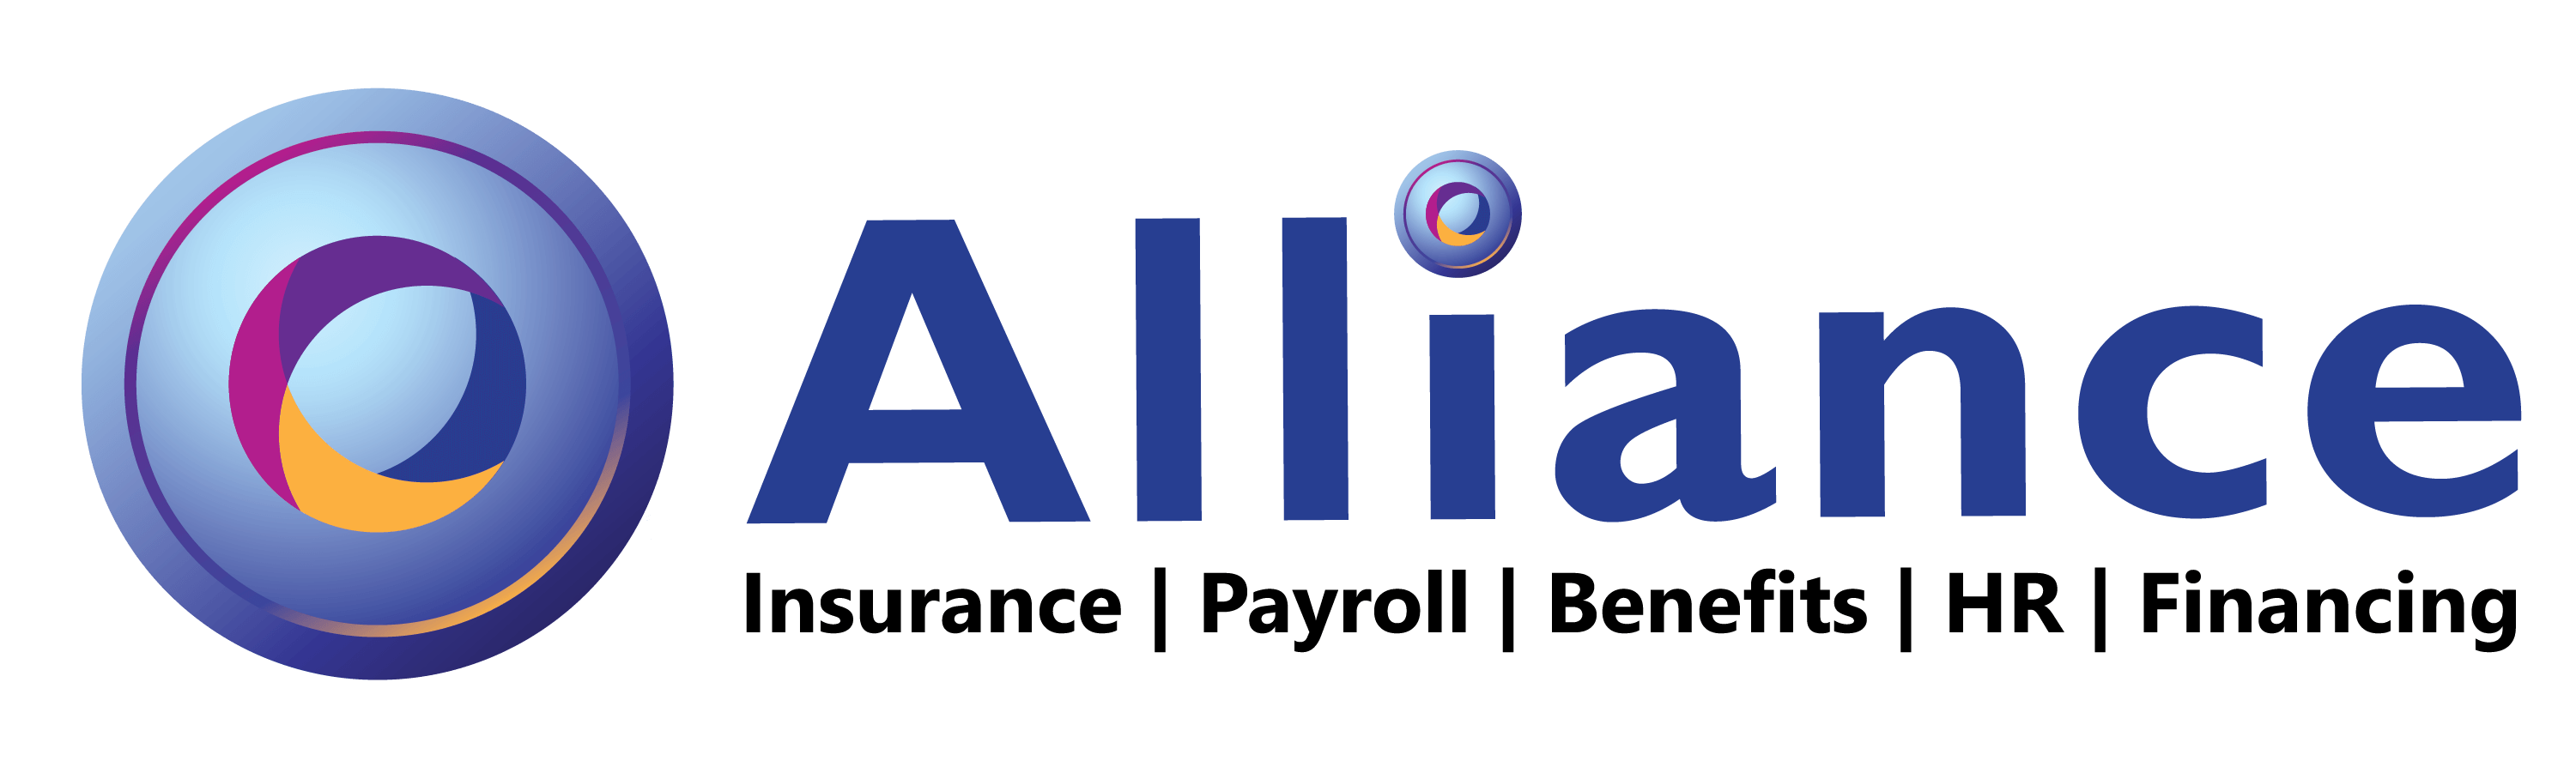 alliance services logo corporatepartners